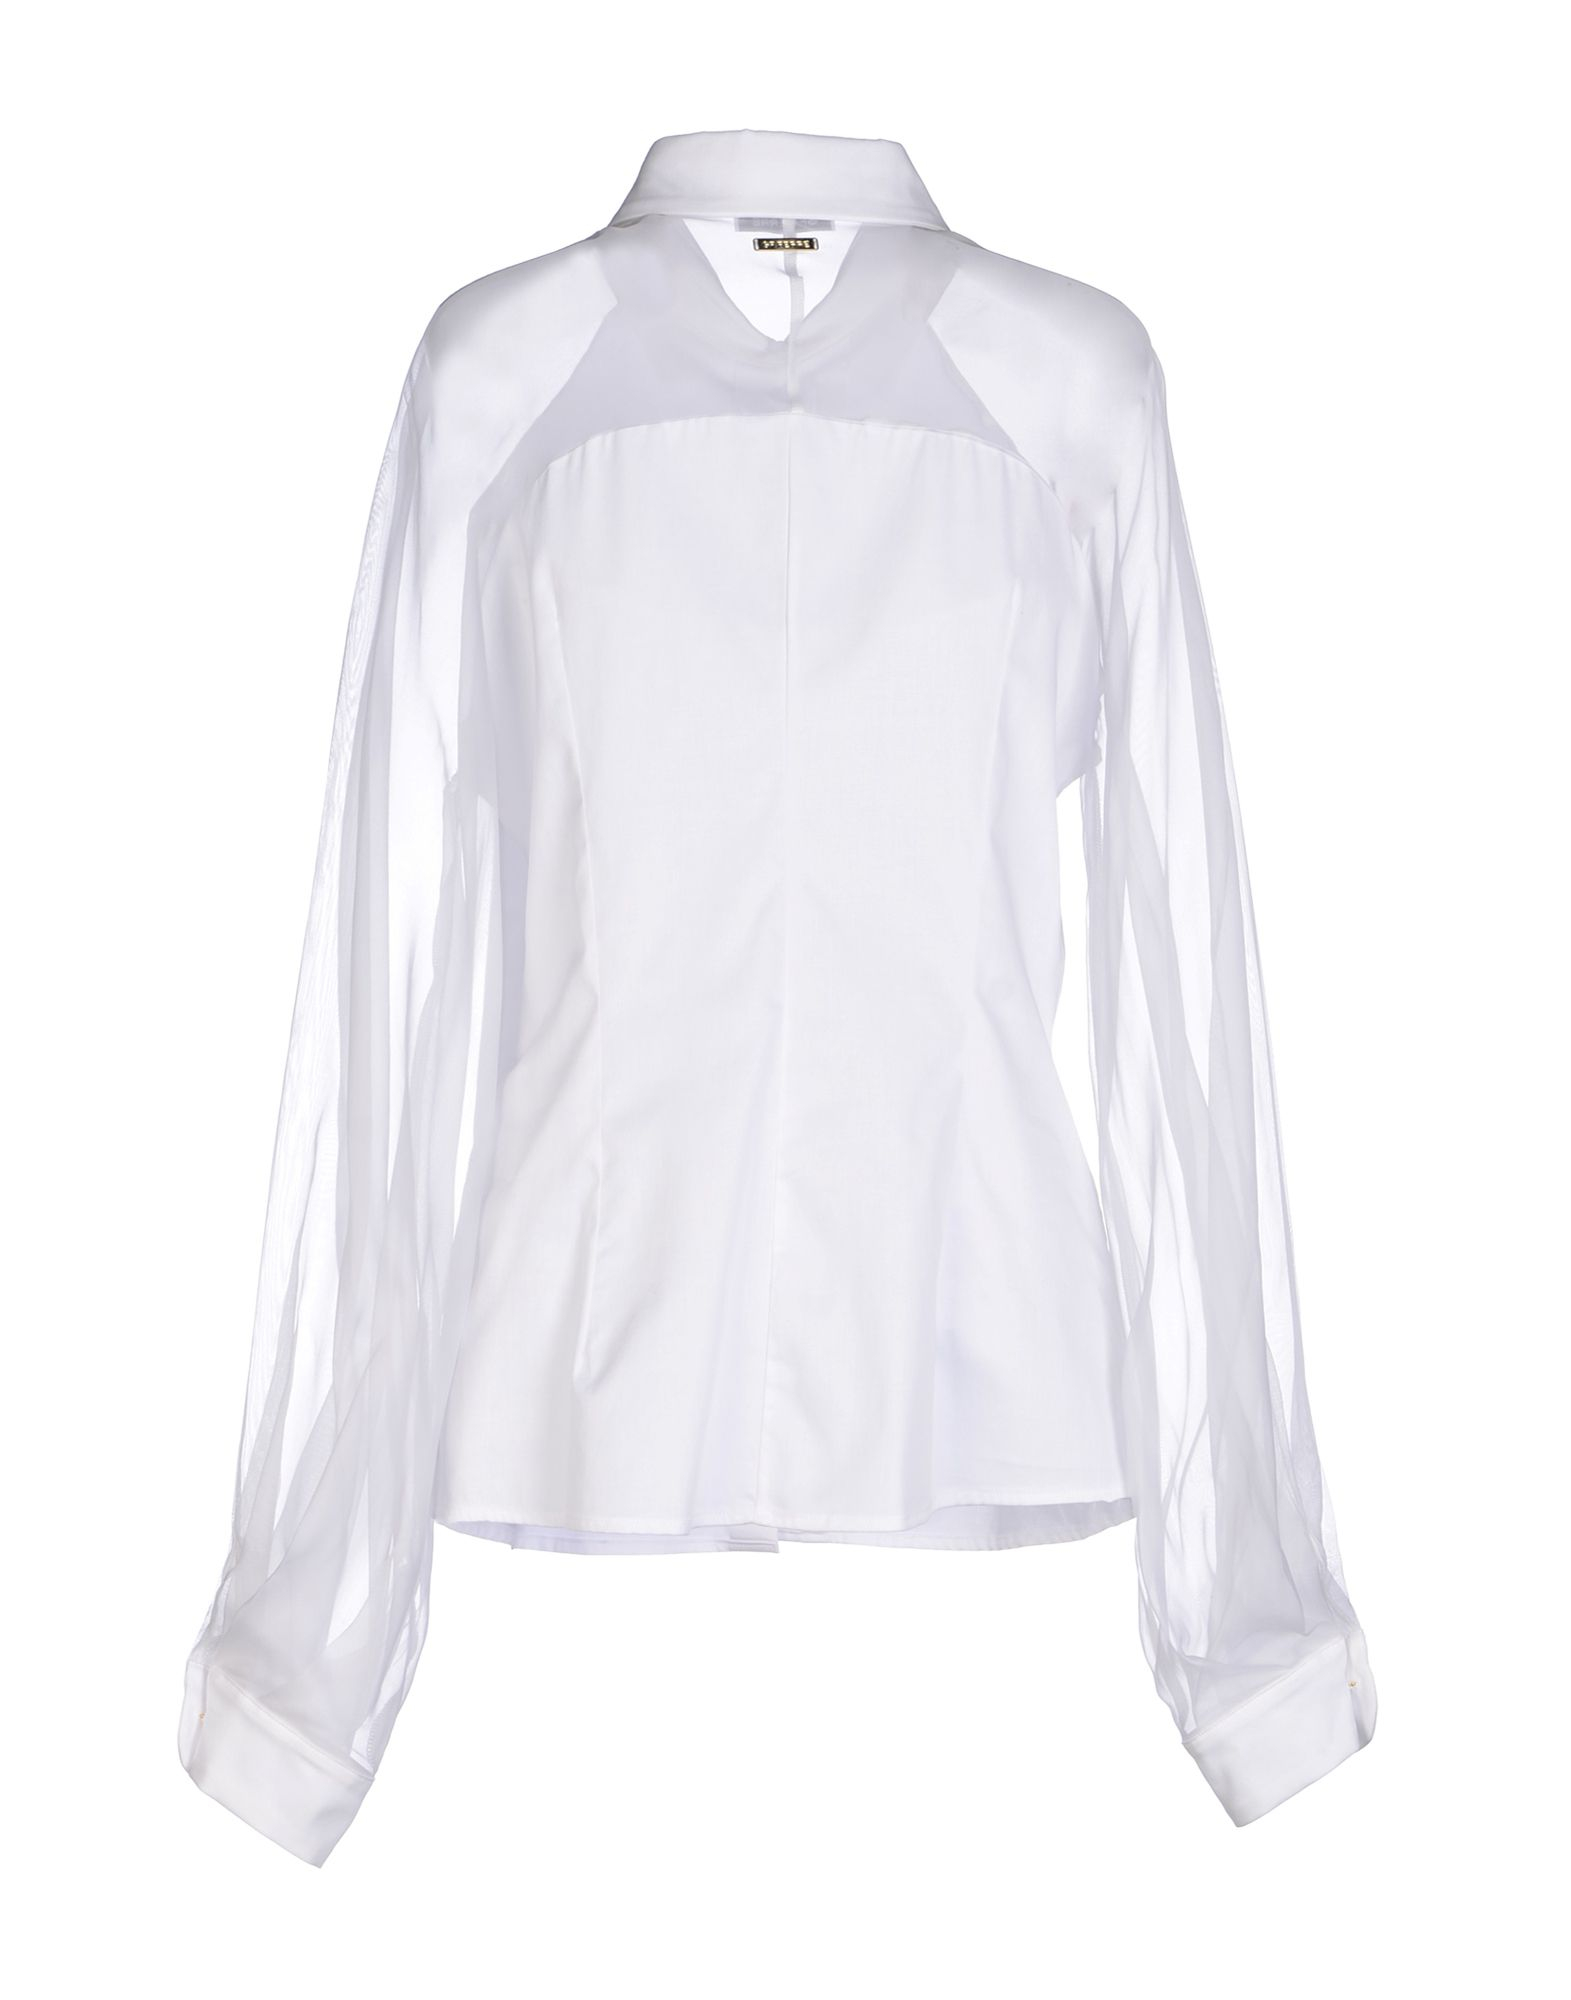 Gianfranco Ferré Shirt in White | Lyst